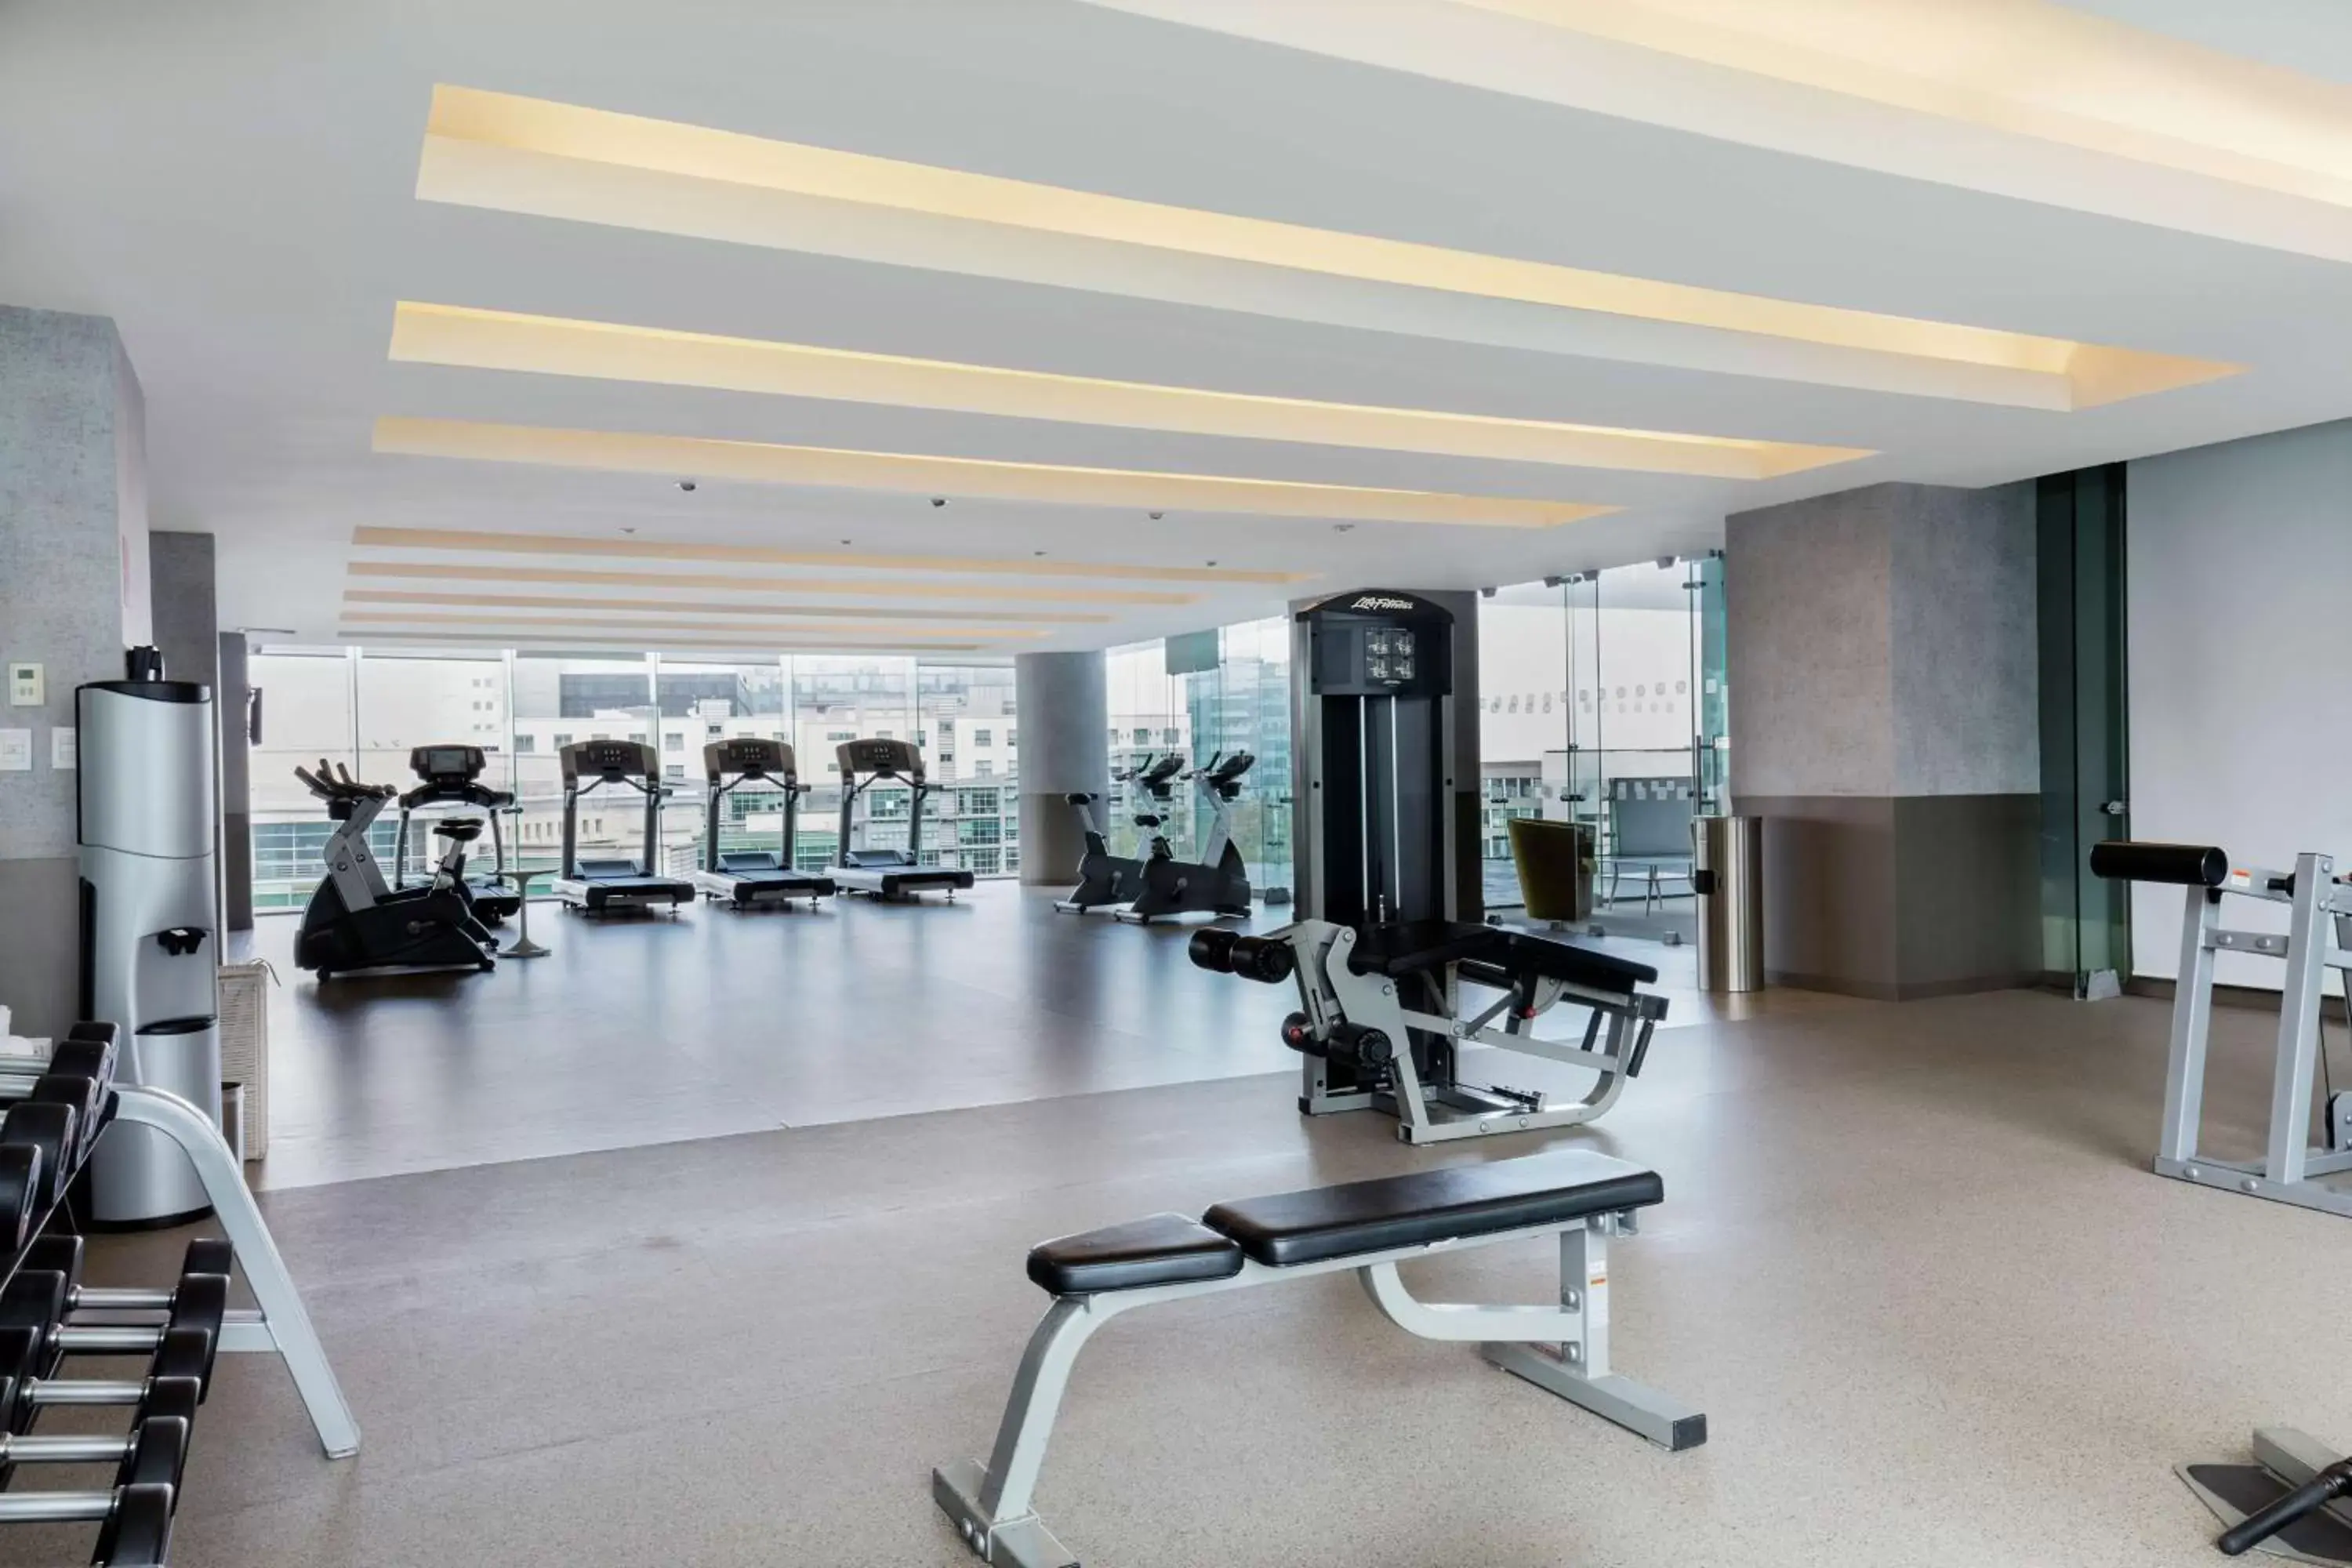 Fitness centre/facilities, Fitness Center/Facilities in Doubletree By Hilton Mexico City Santa Fe